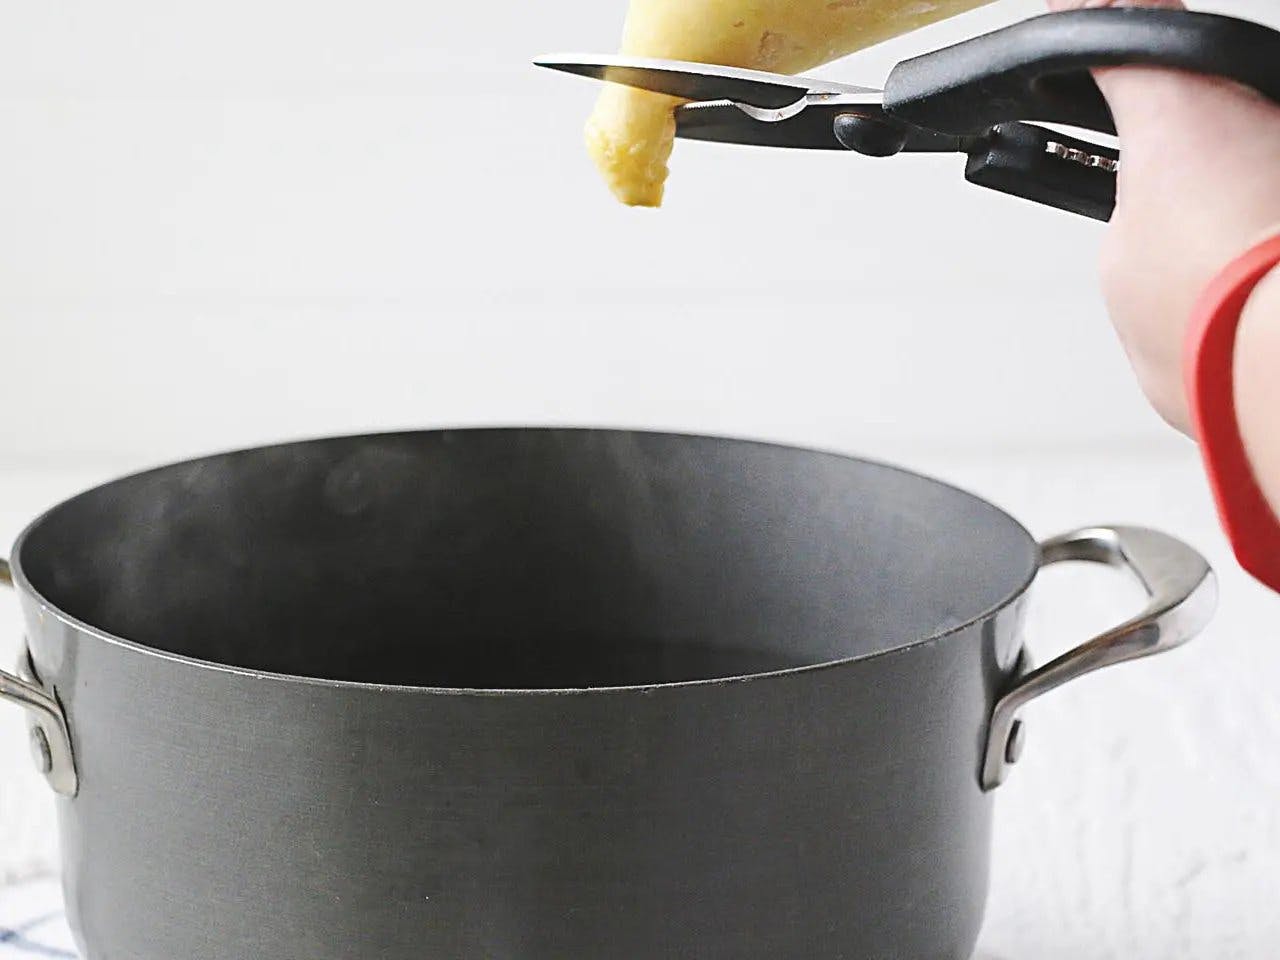 Scissors cutting Ziploc bag of gnocchi dough over cooking pot.